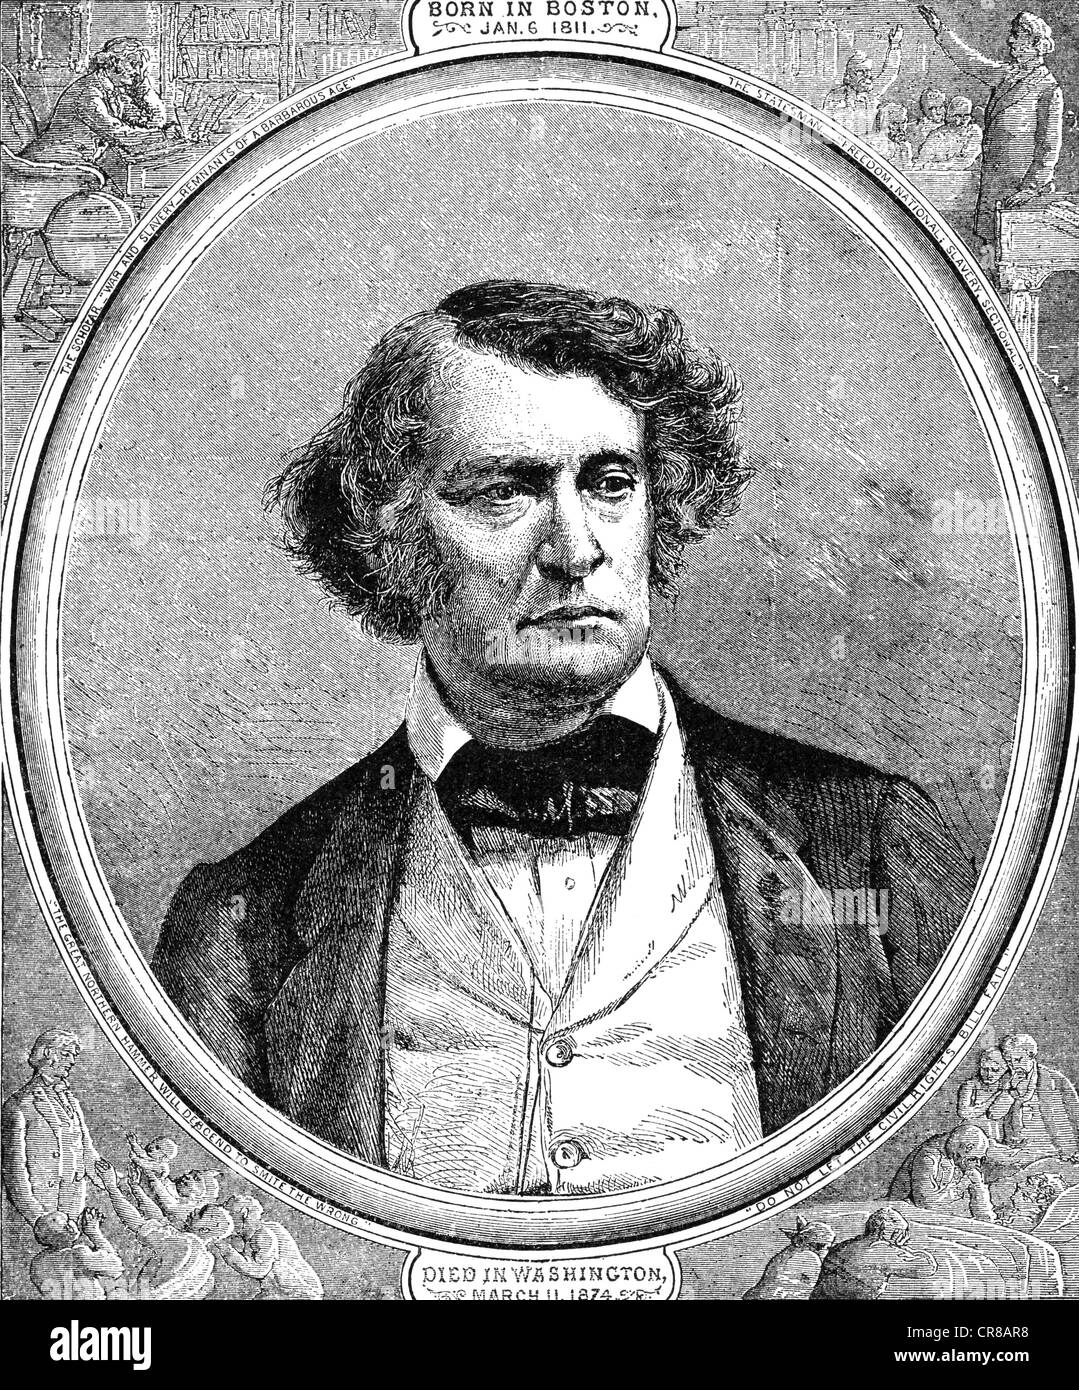 Sumner, Charles, 6.1.11.11.3.1874, US-amerikanischer Politiker (Whig / Dem. / Rep.), US-Senator aus Massachusetts von 1851 - 1874, Porträt, Holzgravur, Ende des 19. Jahrhunderts, Stockfoto